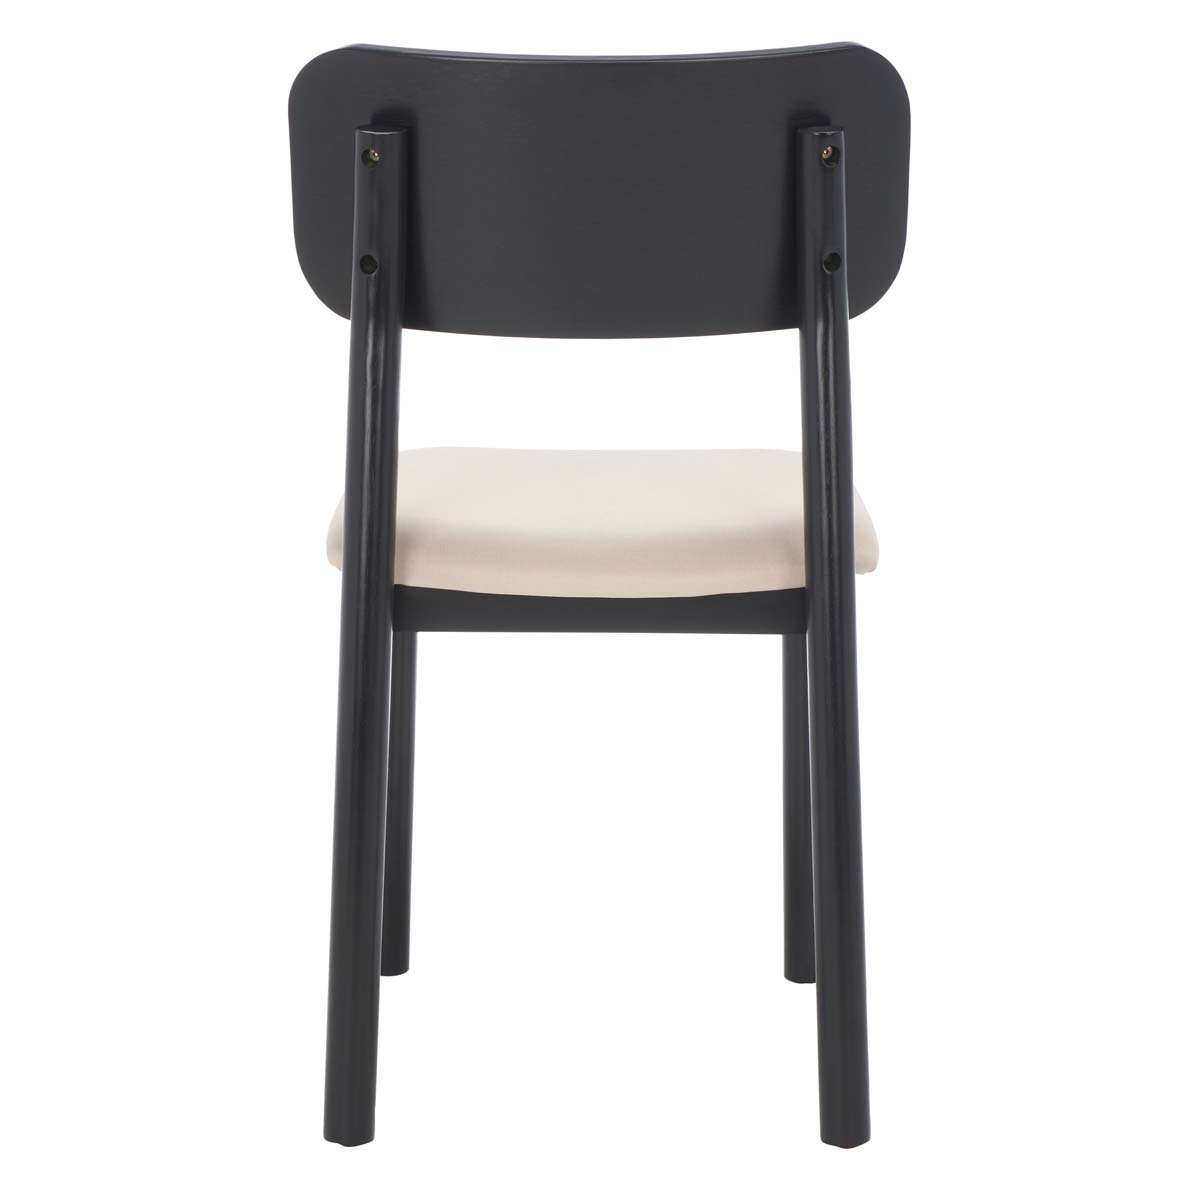 Safavieh Egon Dining Chair , DCH1014 - Black/White (Set of 2)